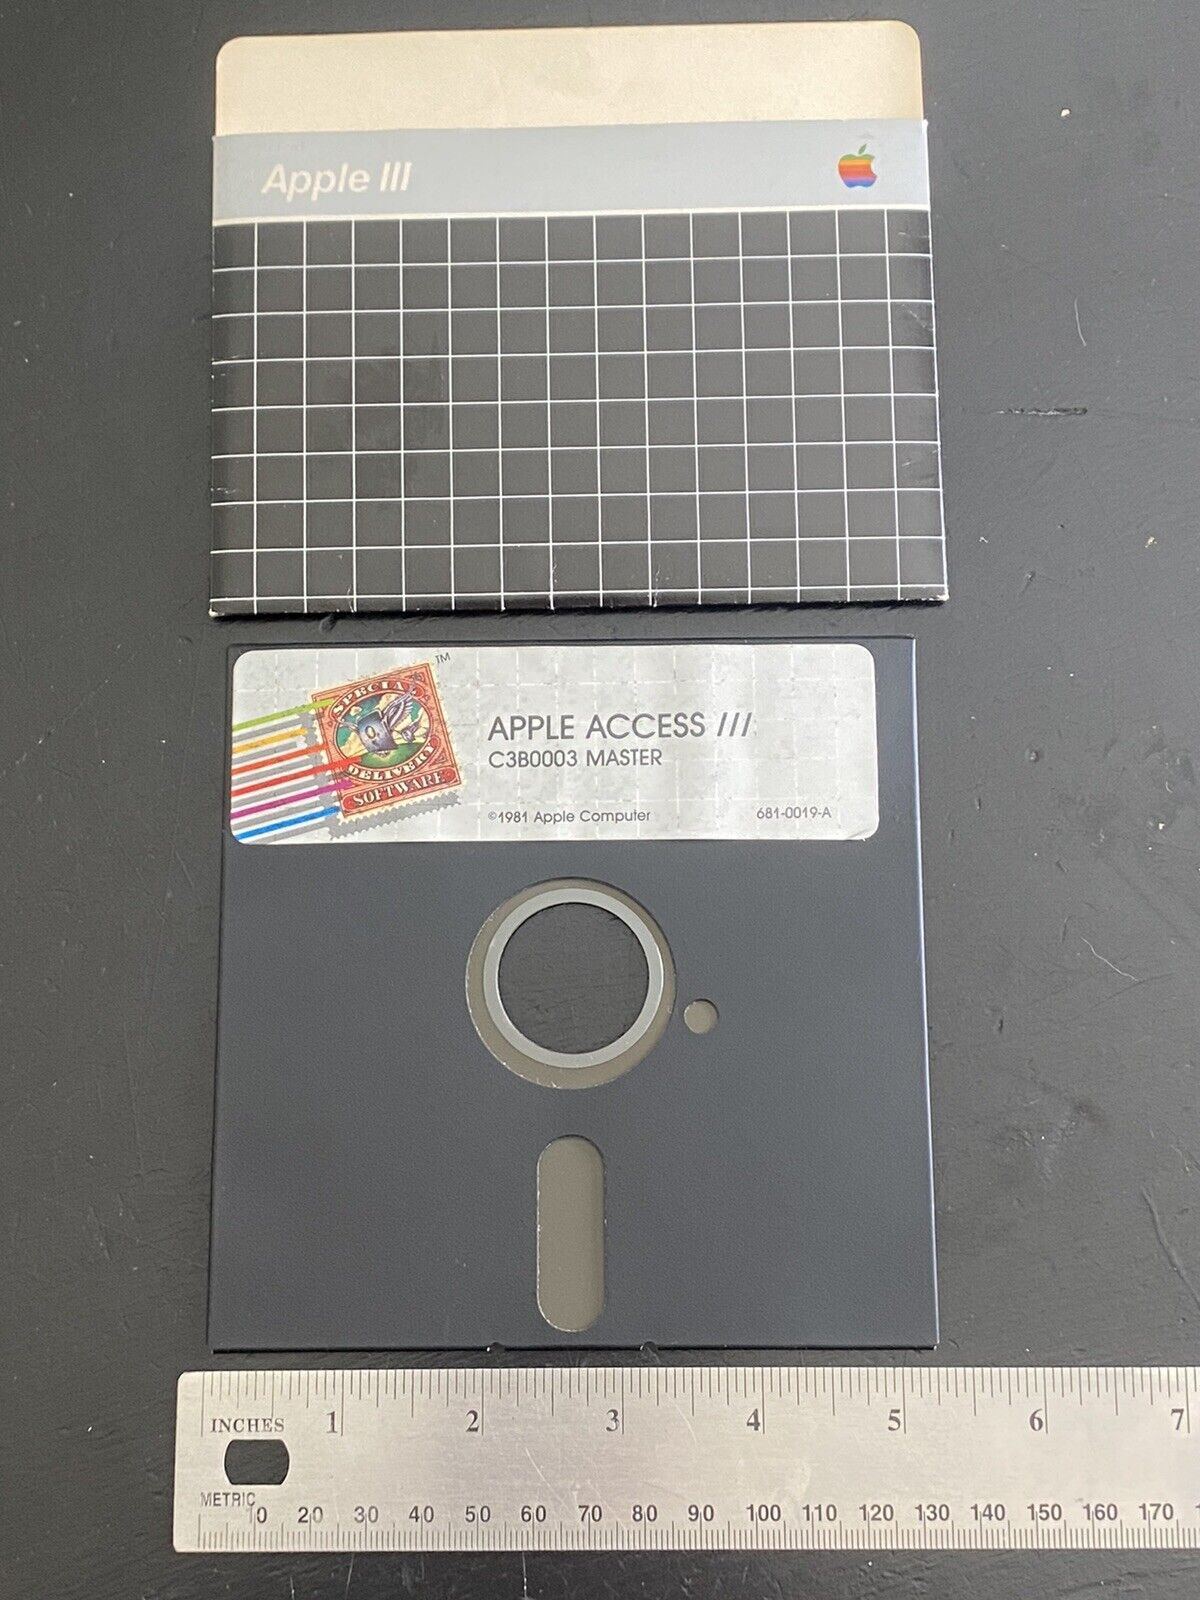 Apple III Access C3B0003 Master 5.25” Floppy Disc - 681-0119-A - Ultra Rare